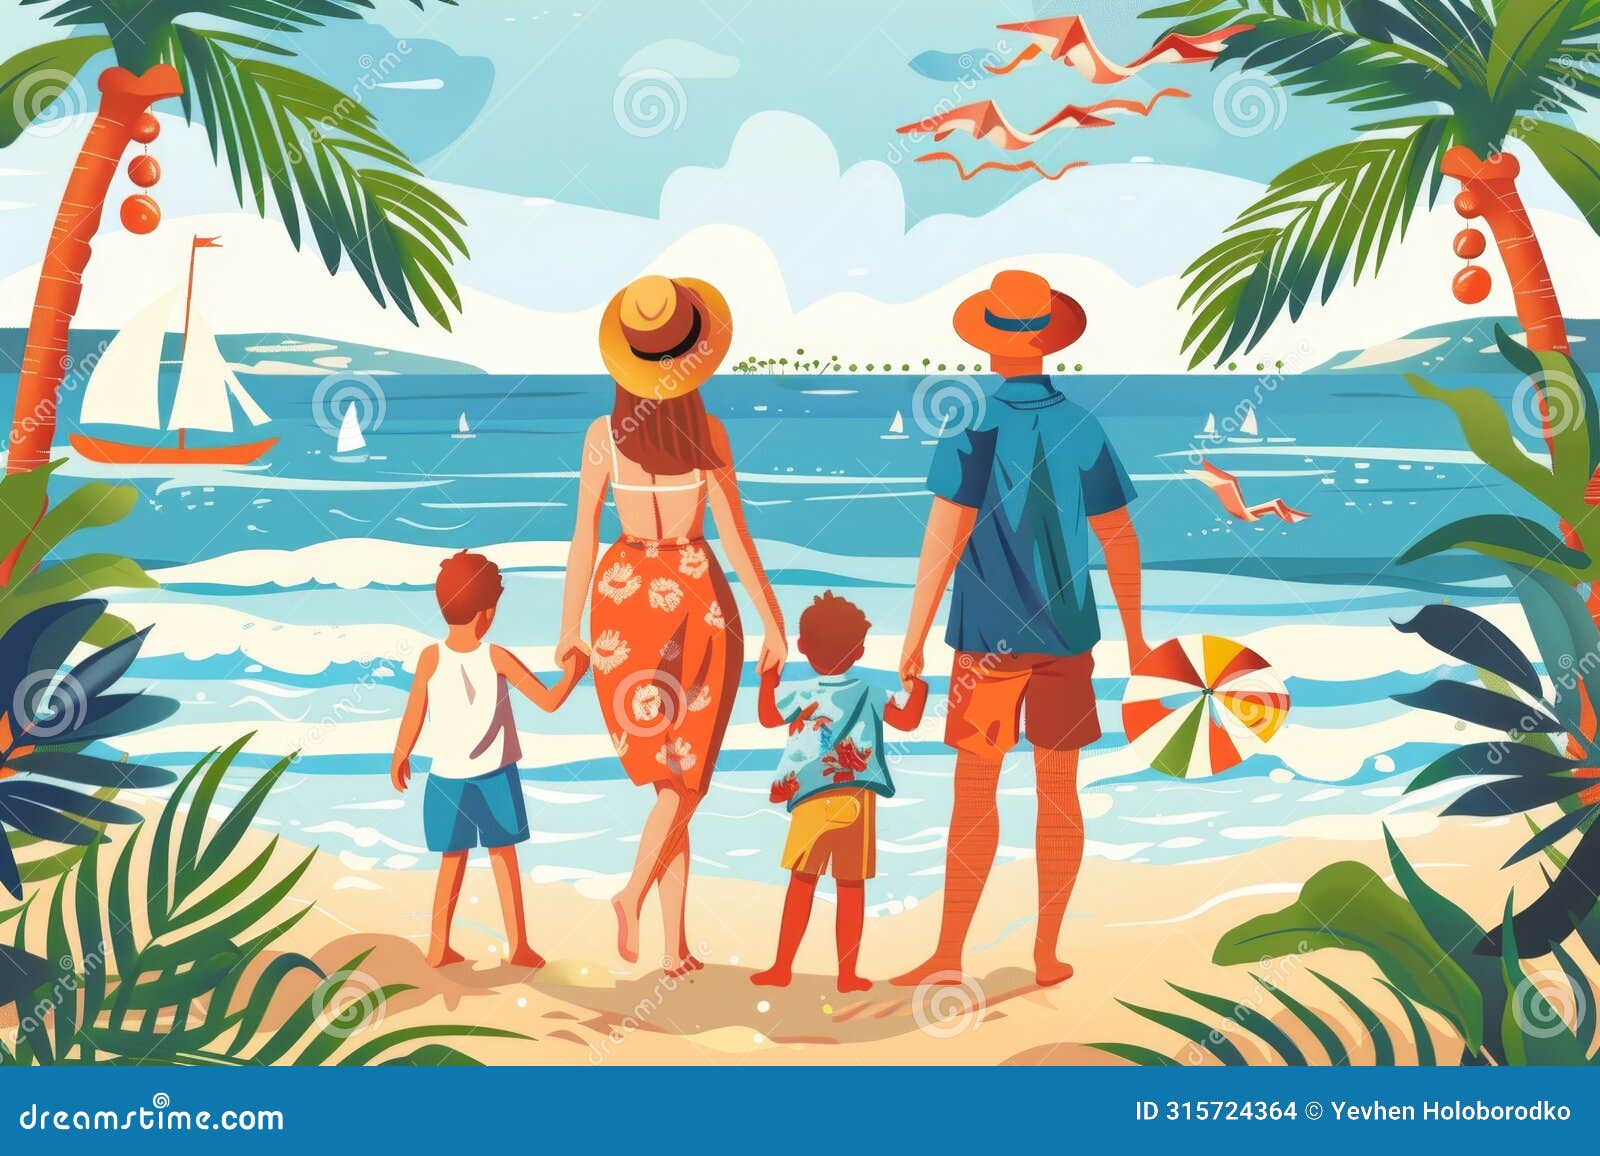 family summer beach fun. trendy printmaking style  of people enjoying vacation day